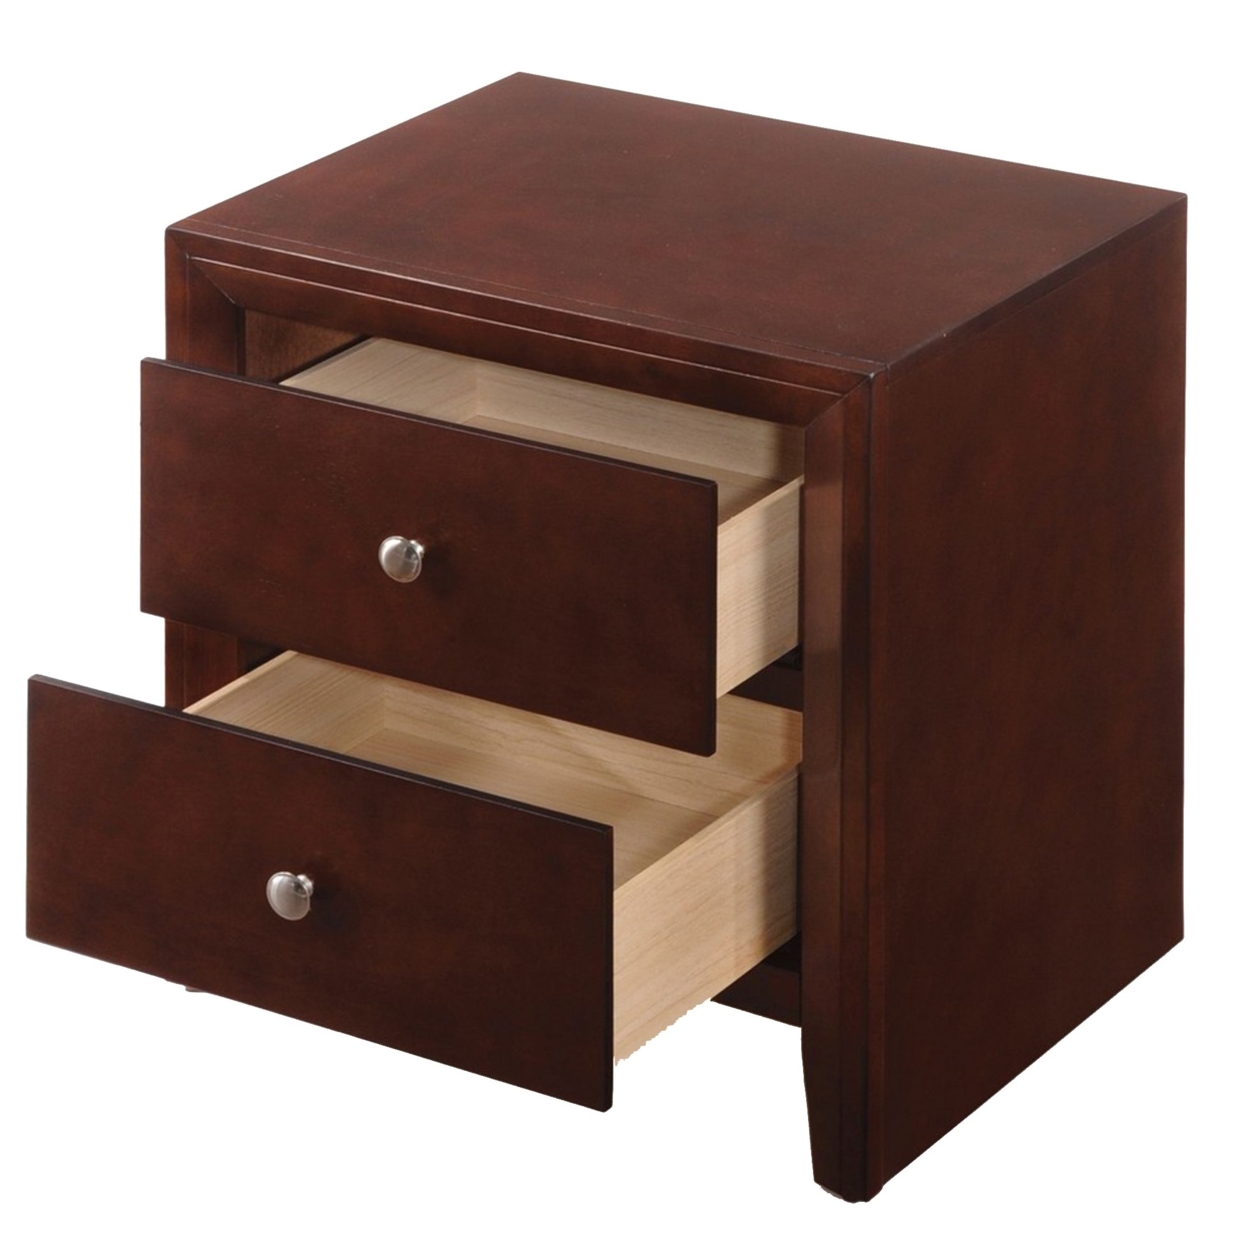 Wooden Nightstand With Two Storage Drawers, Cherry Brown- Saltoro Sherpi